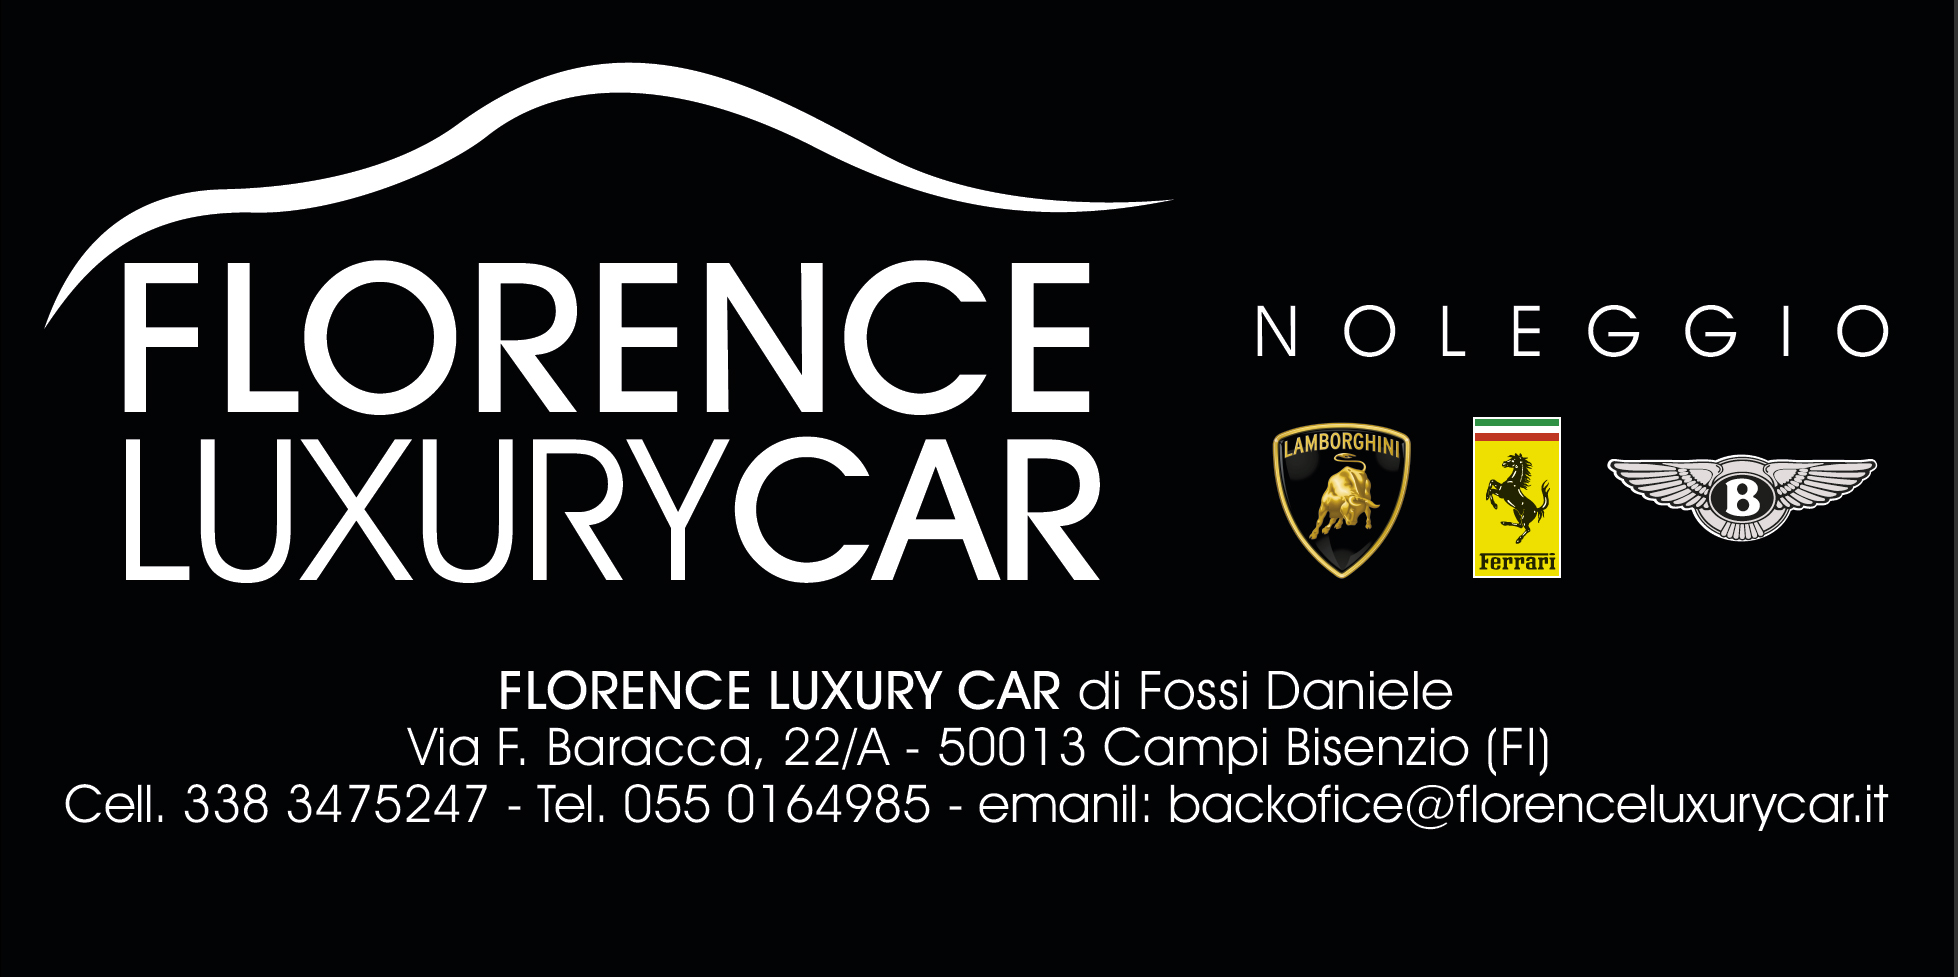 Florence Luxury Car